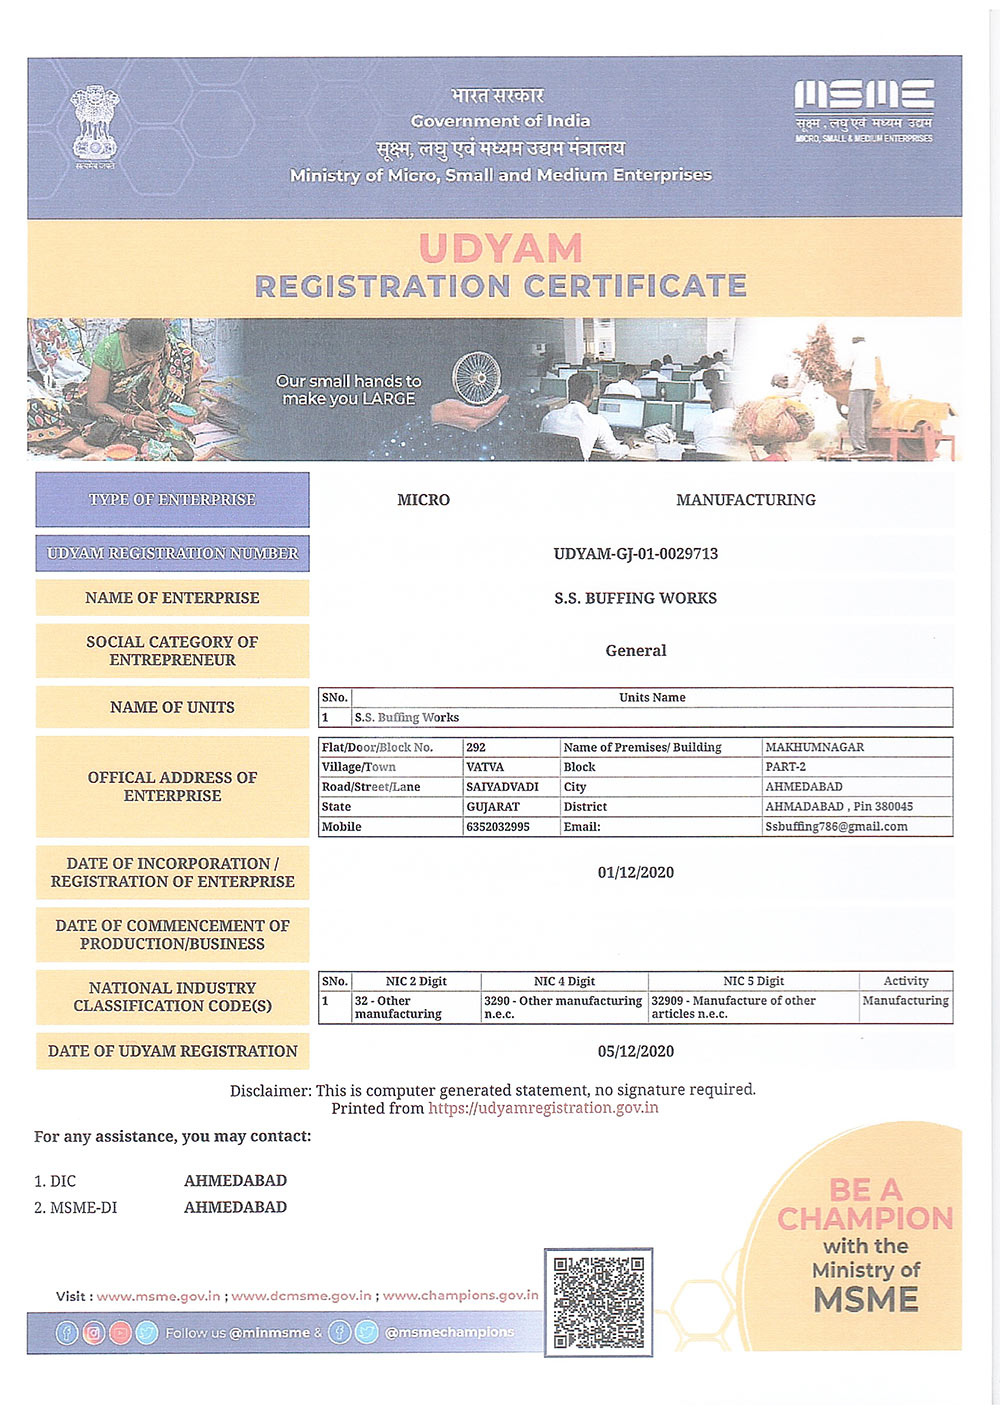 SS MSME Certificate